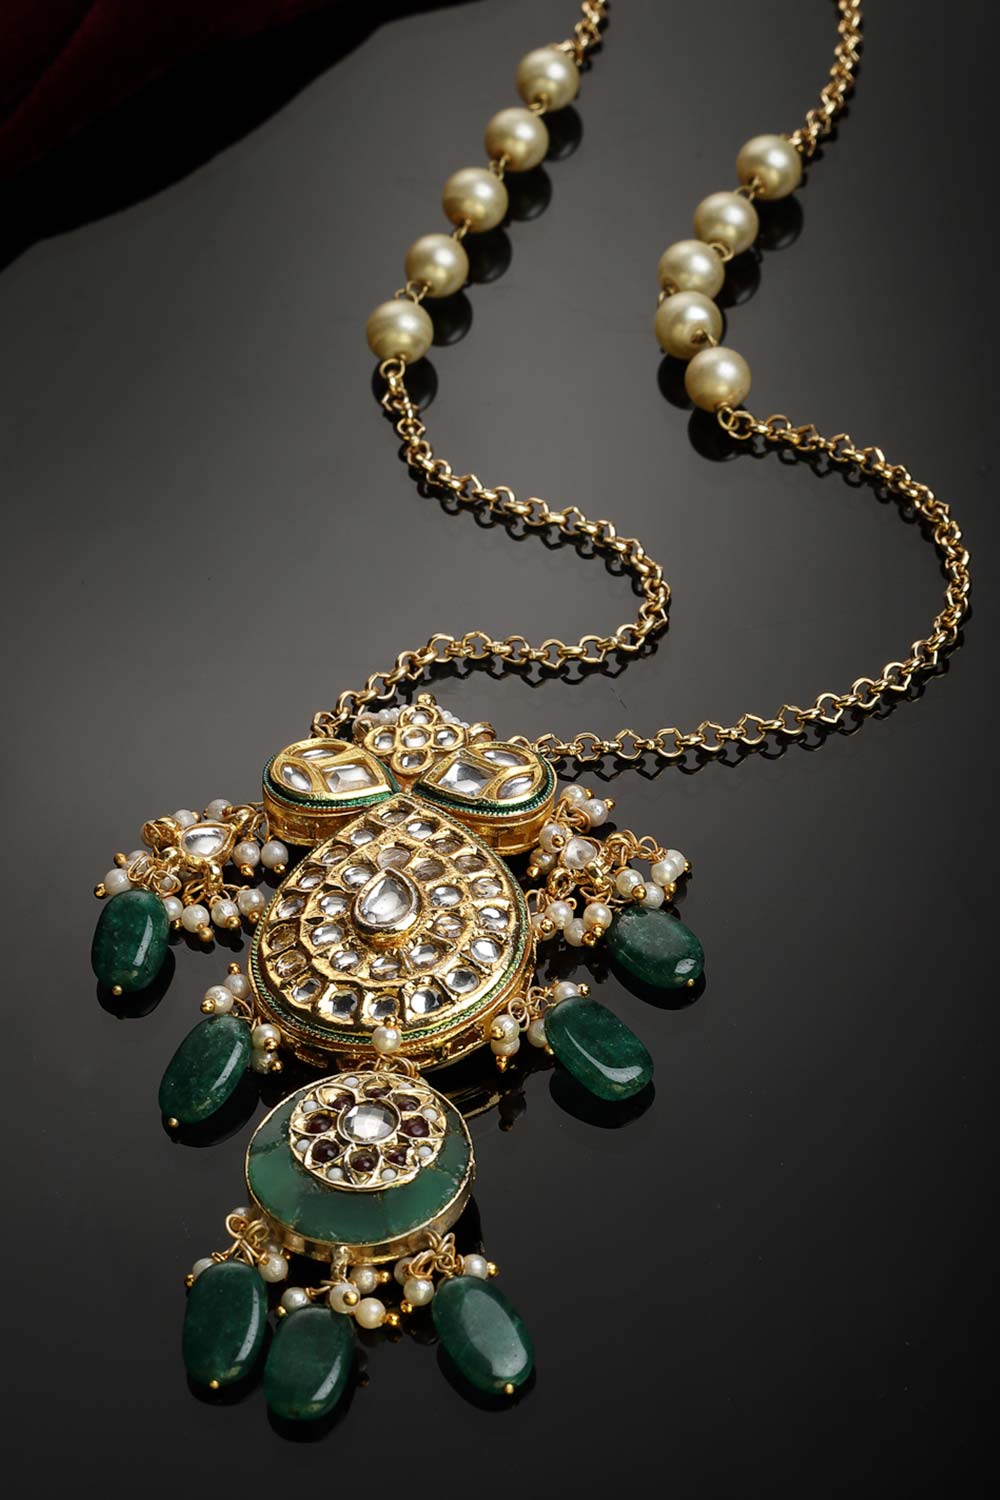 Buy Women's Sterling Silver Necklace in Green - Back